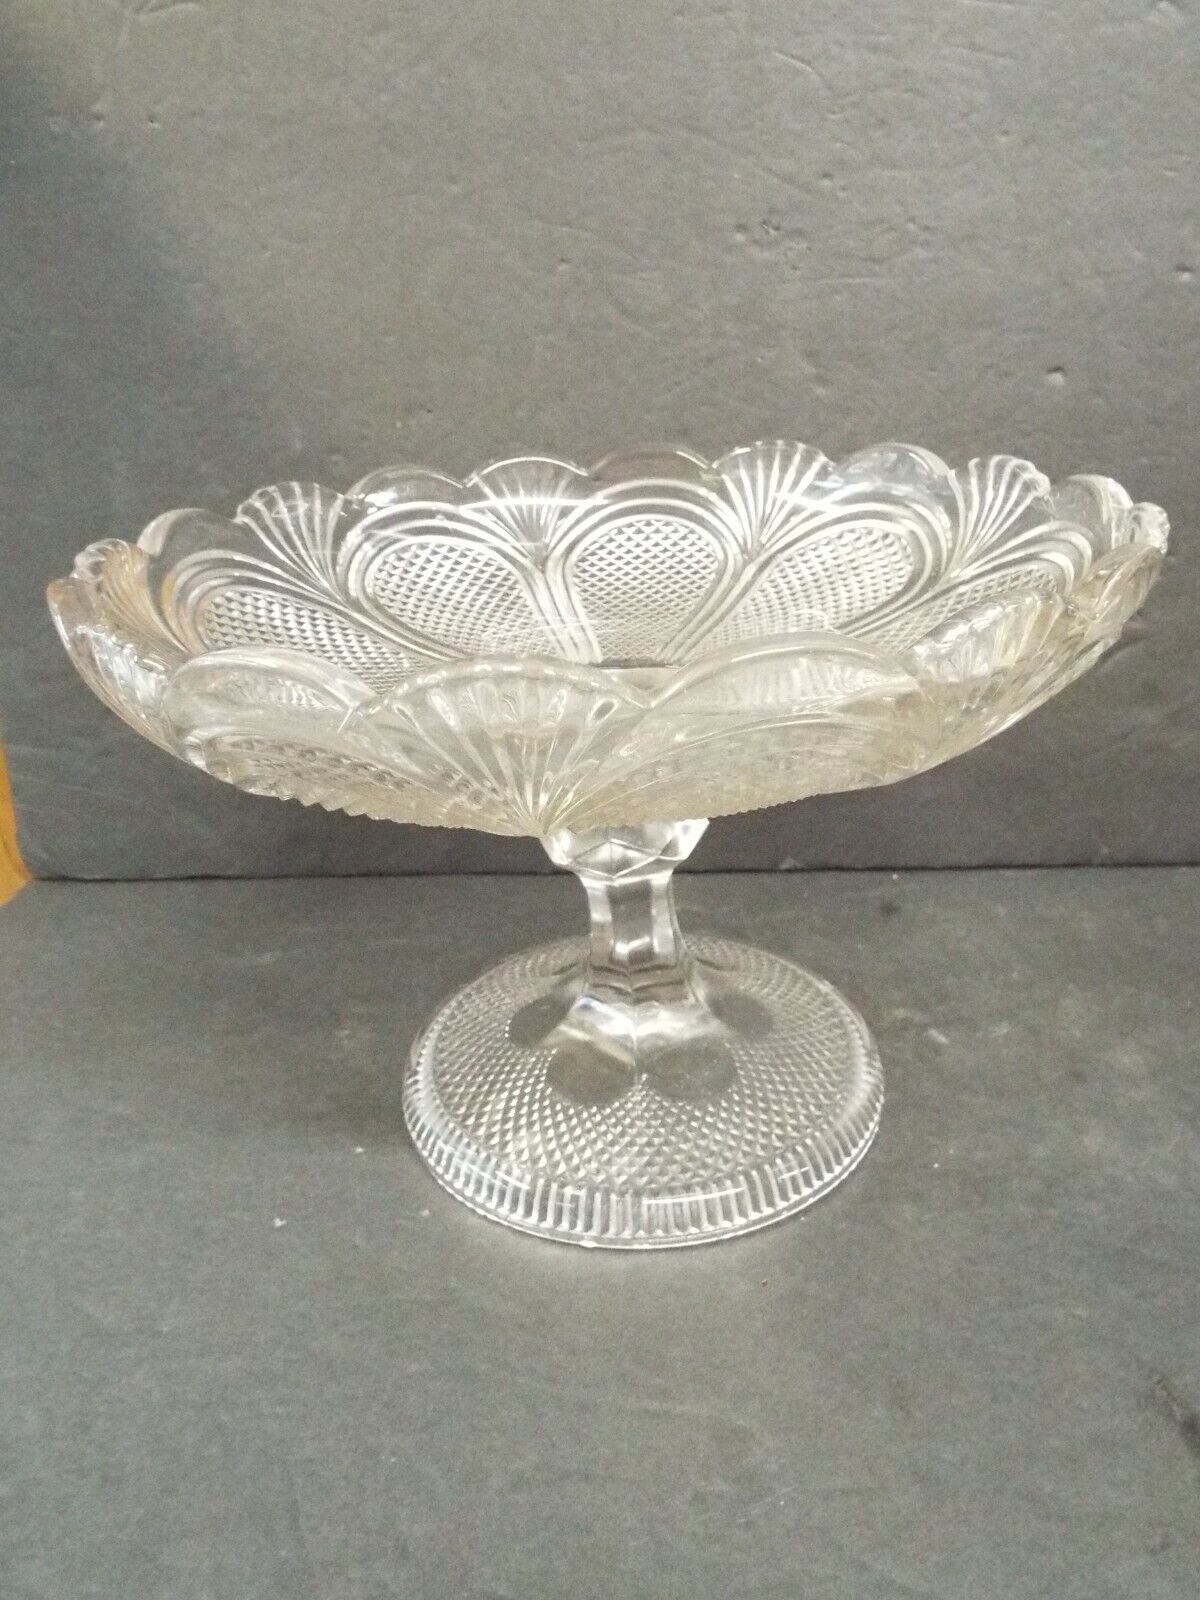 Antique 19th CENTURY ELEGANT GEORGE DAVIDSON DIAMOND POINT GLASS COMPOTE  Bowl 